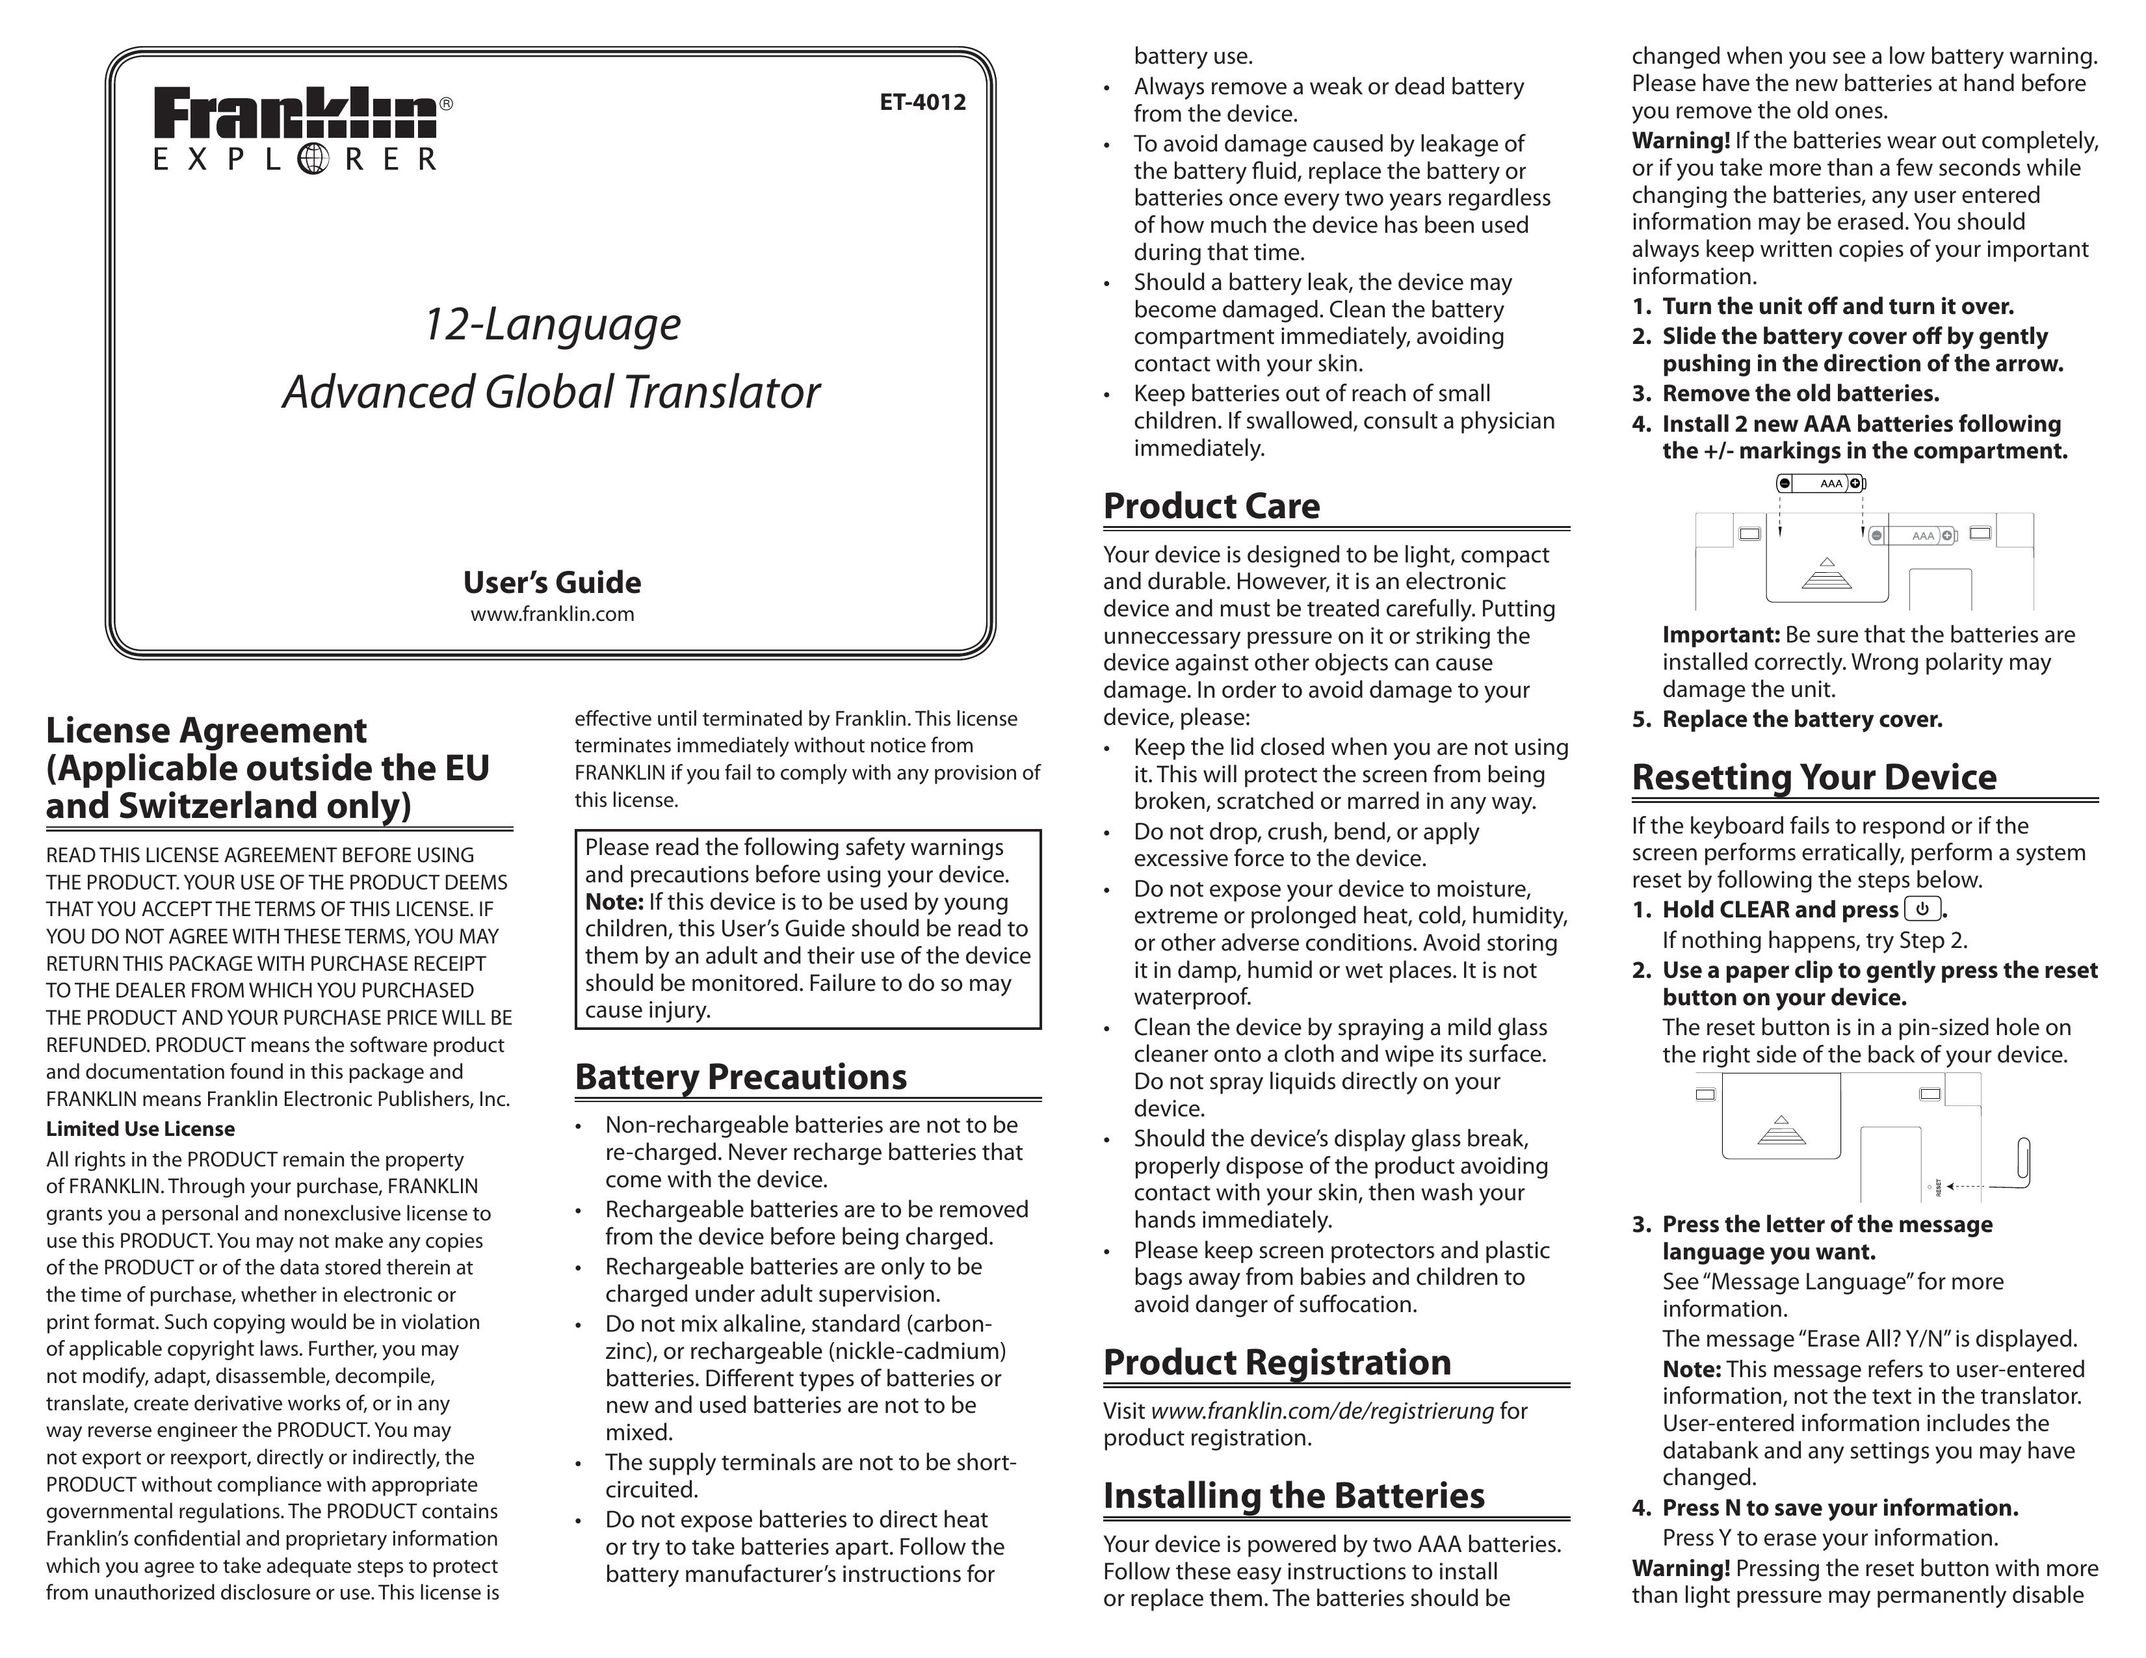 Franklin 12-Language Advanced Global Translator Electronic Accessory User Manual